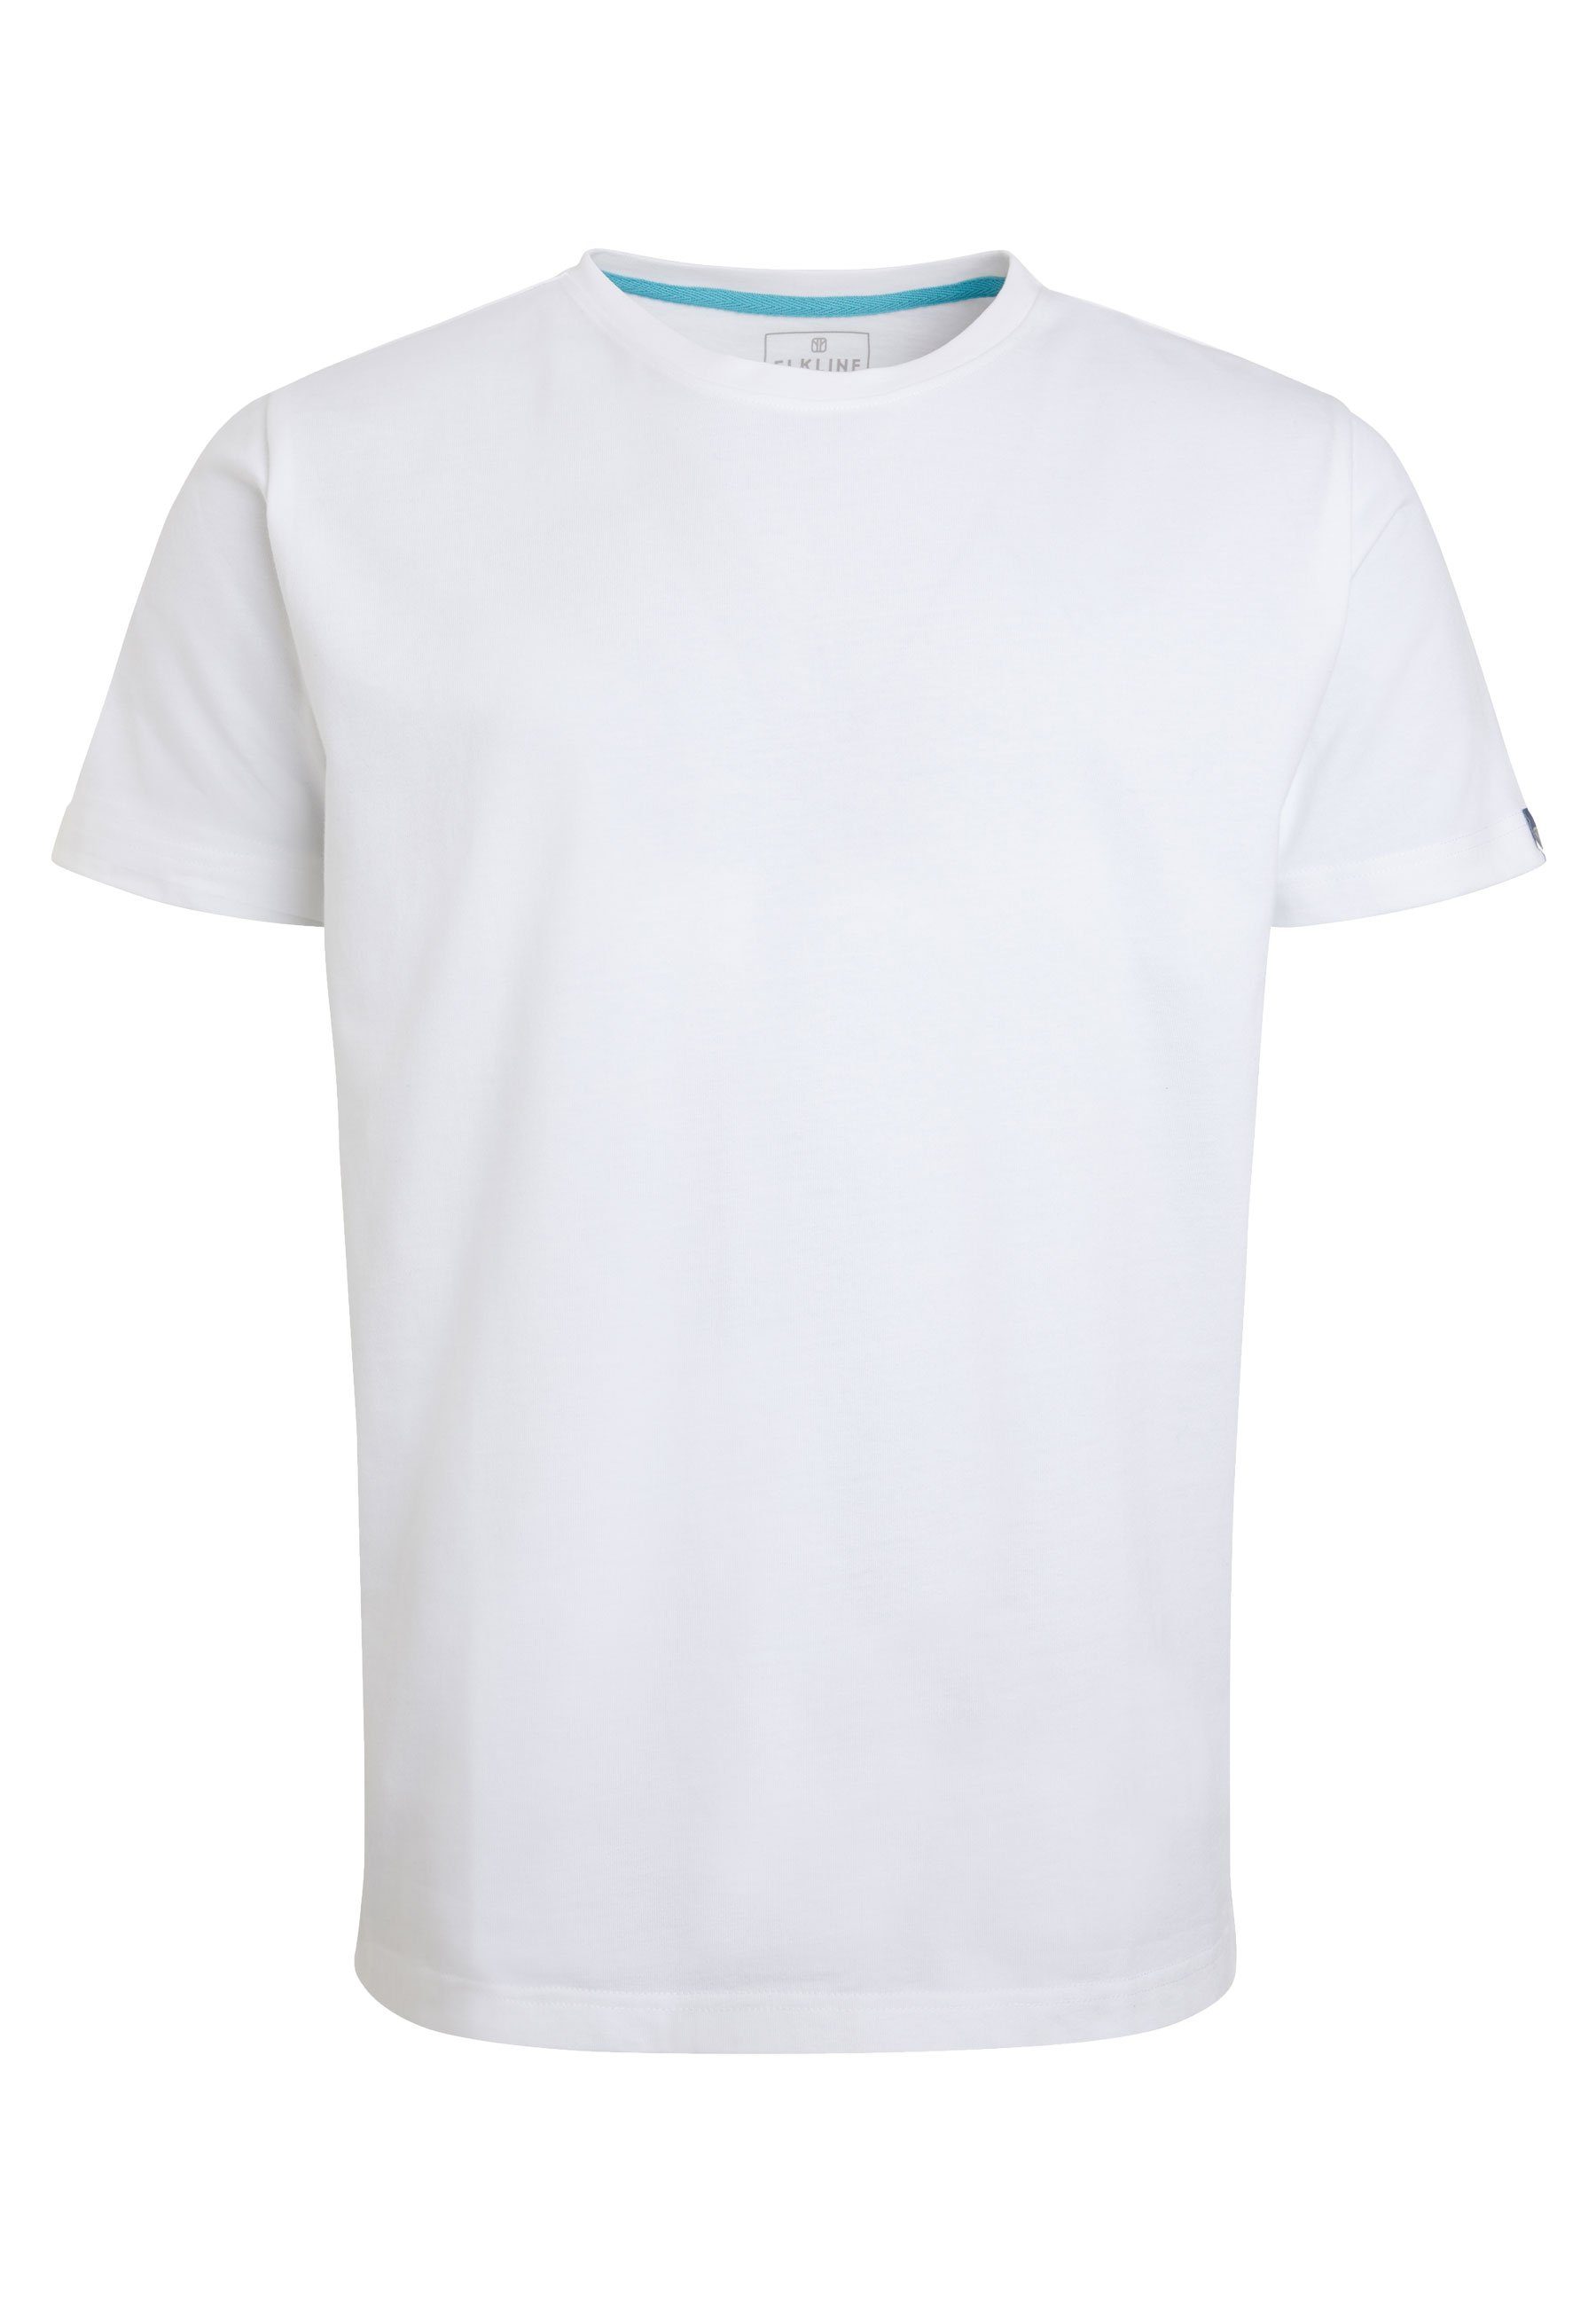 Elkline Have Basic white T-Shirt Uni-Farben Shirt Must